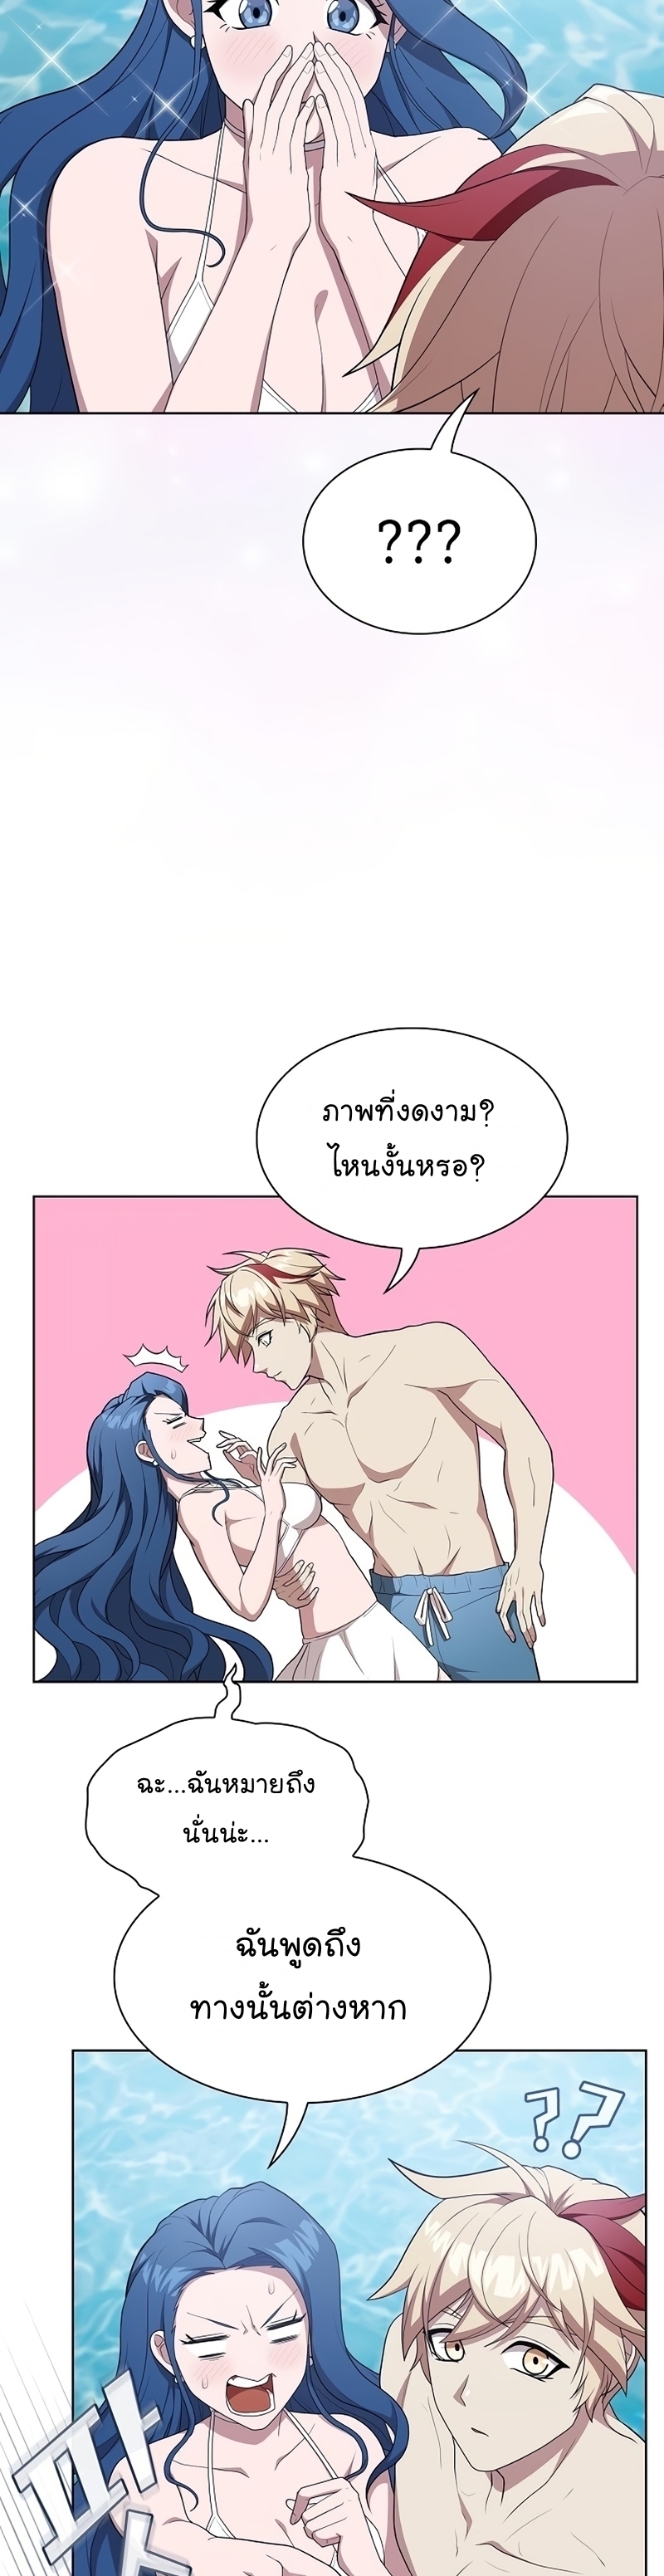 The Tutorial Towel Manga Manhwa Wei 165 (2)